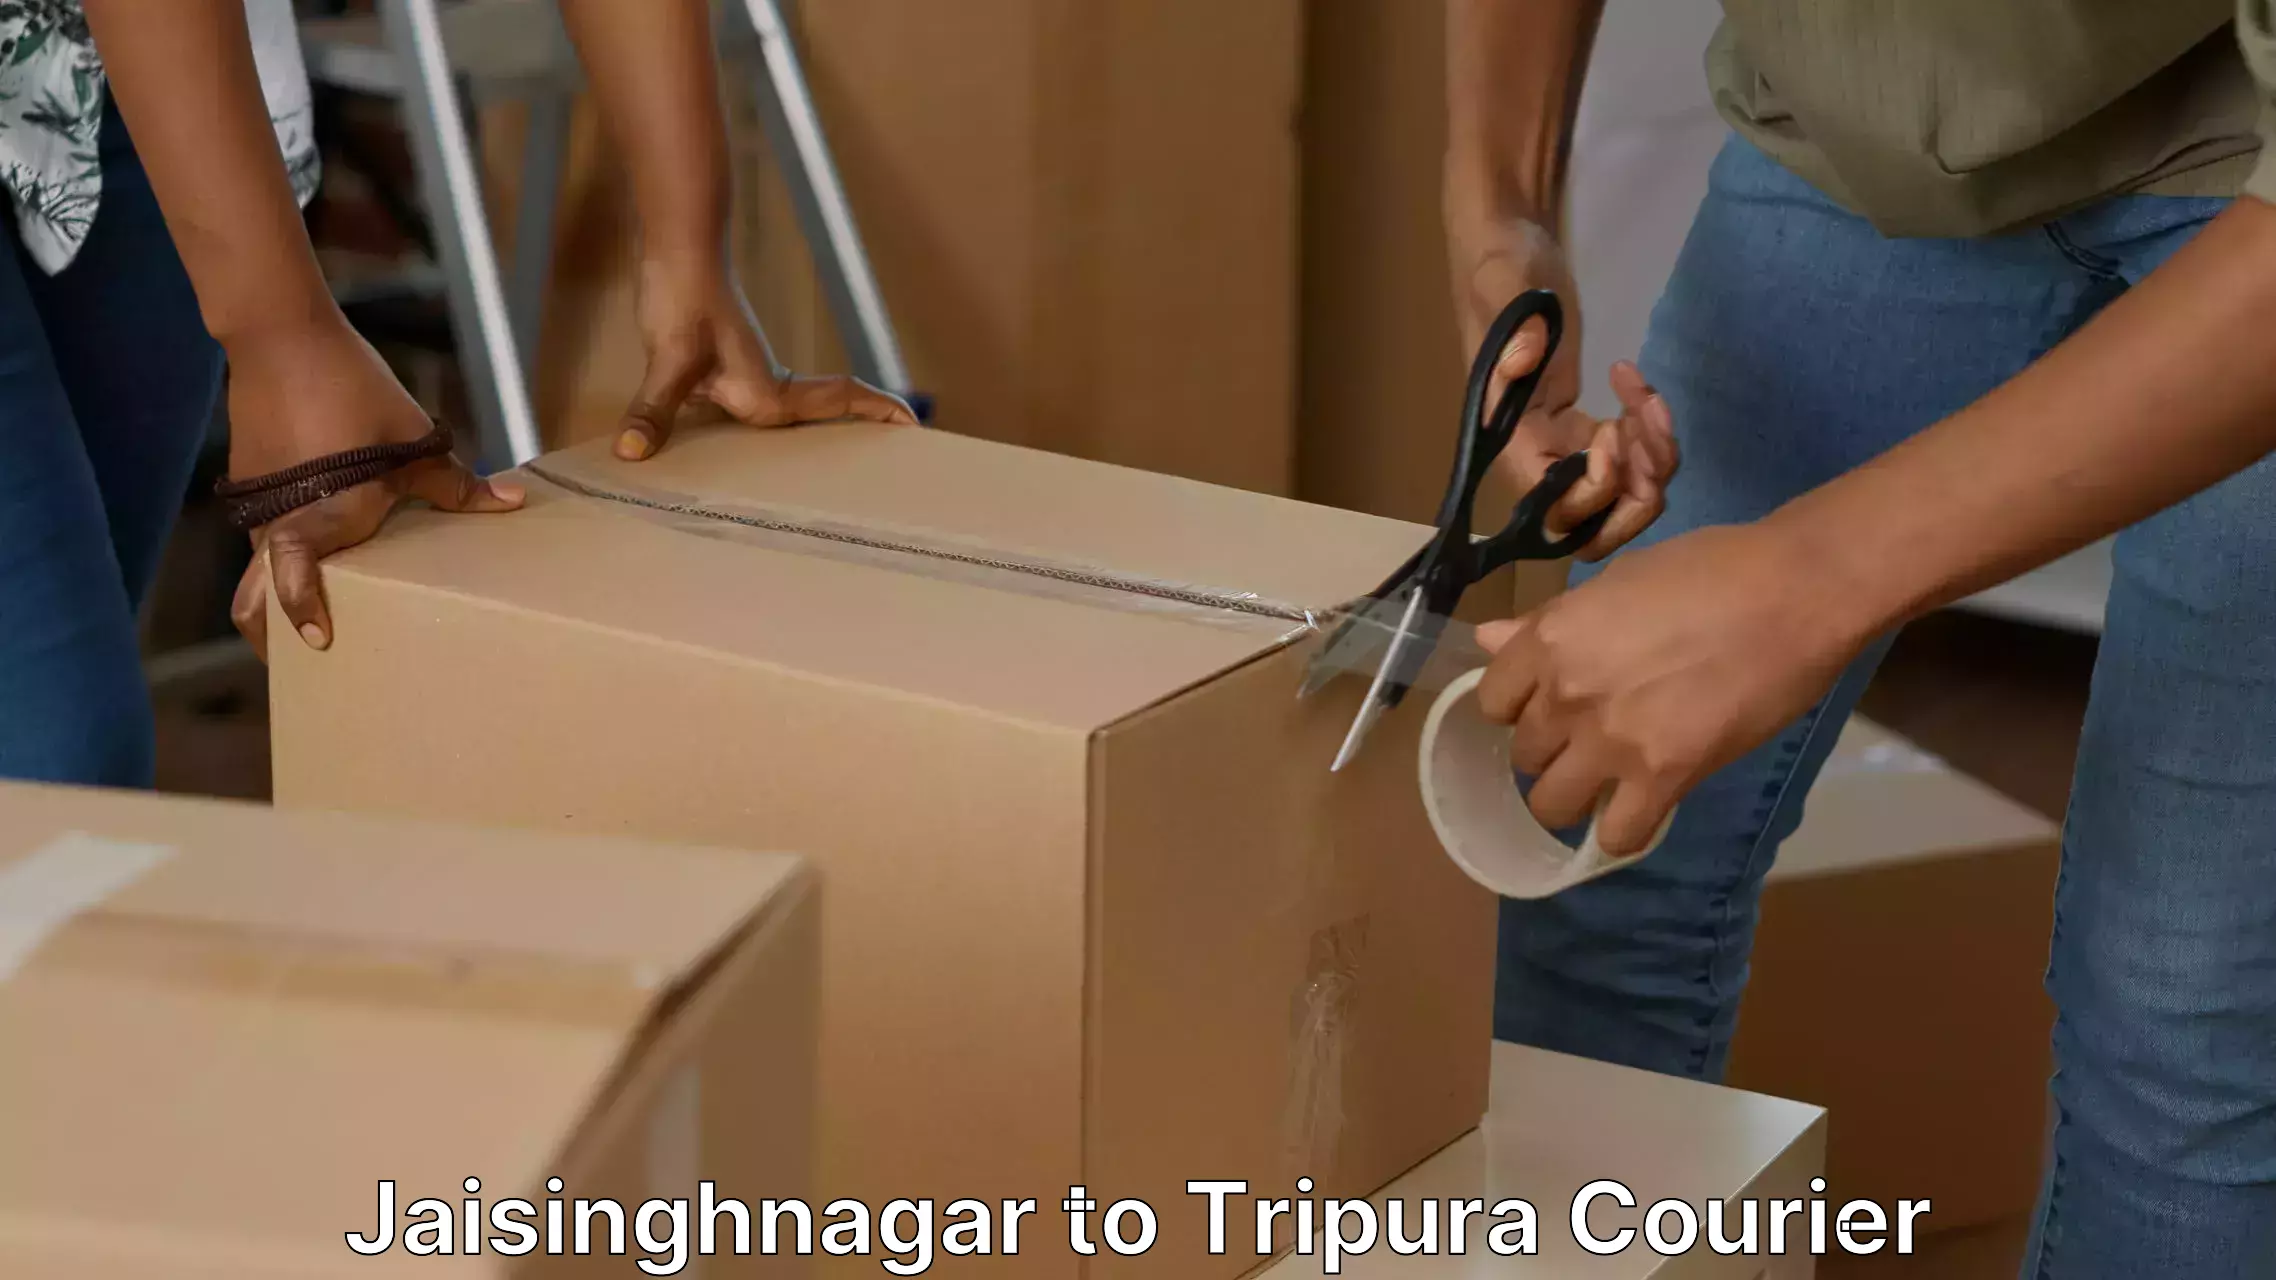 Professional moving company Jaisinghnagar to Udaipur Tripura